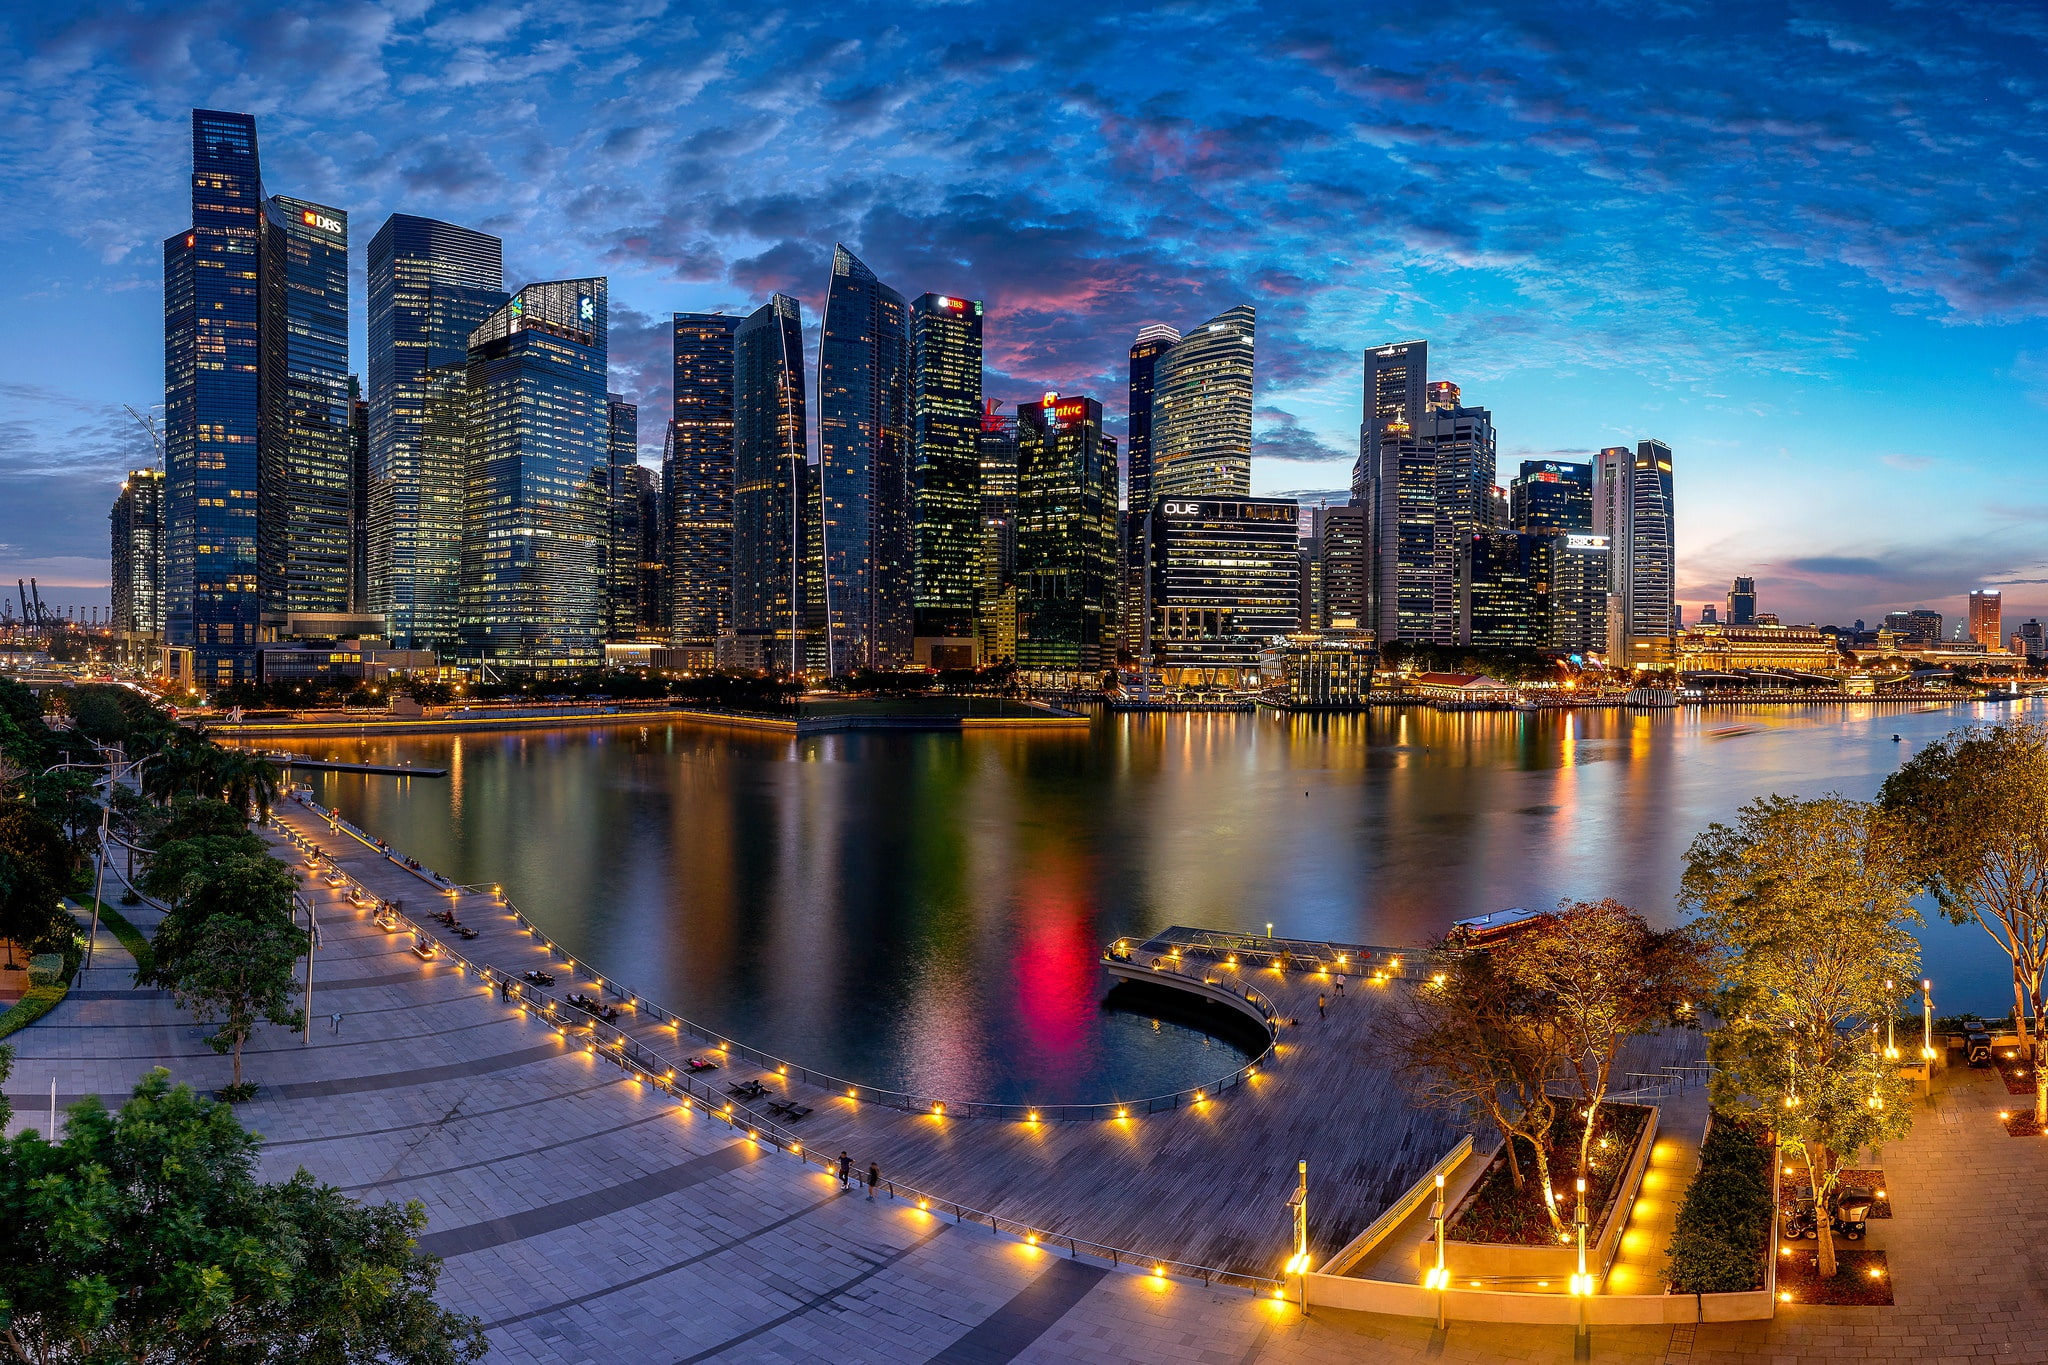 lights, the evening, Singapore, megapolis, Marina Bay